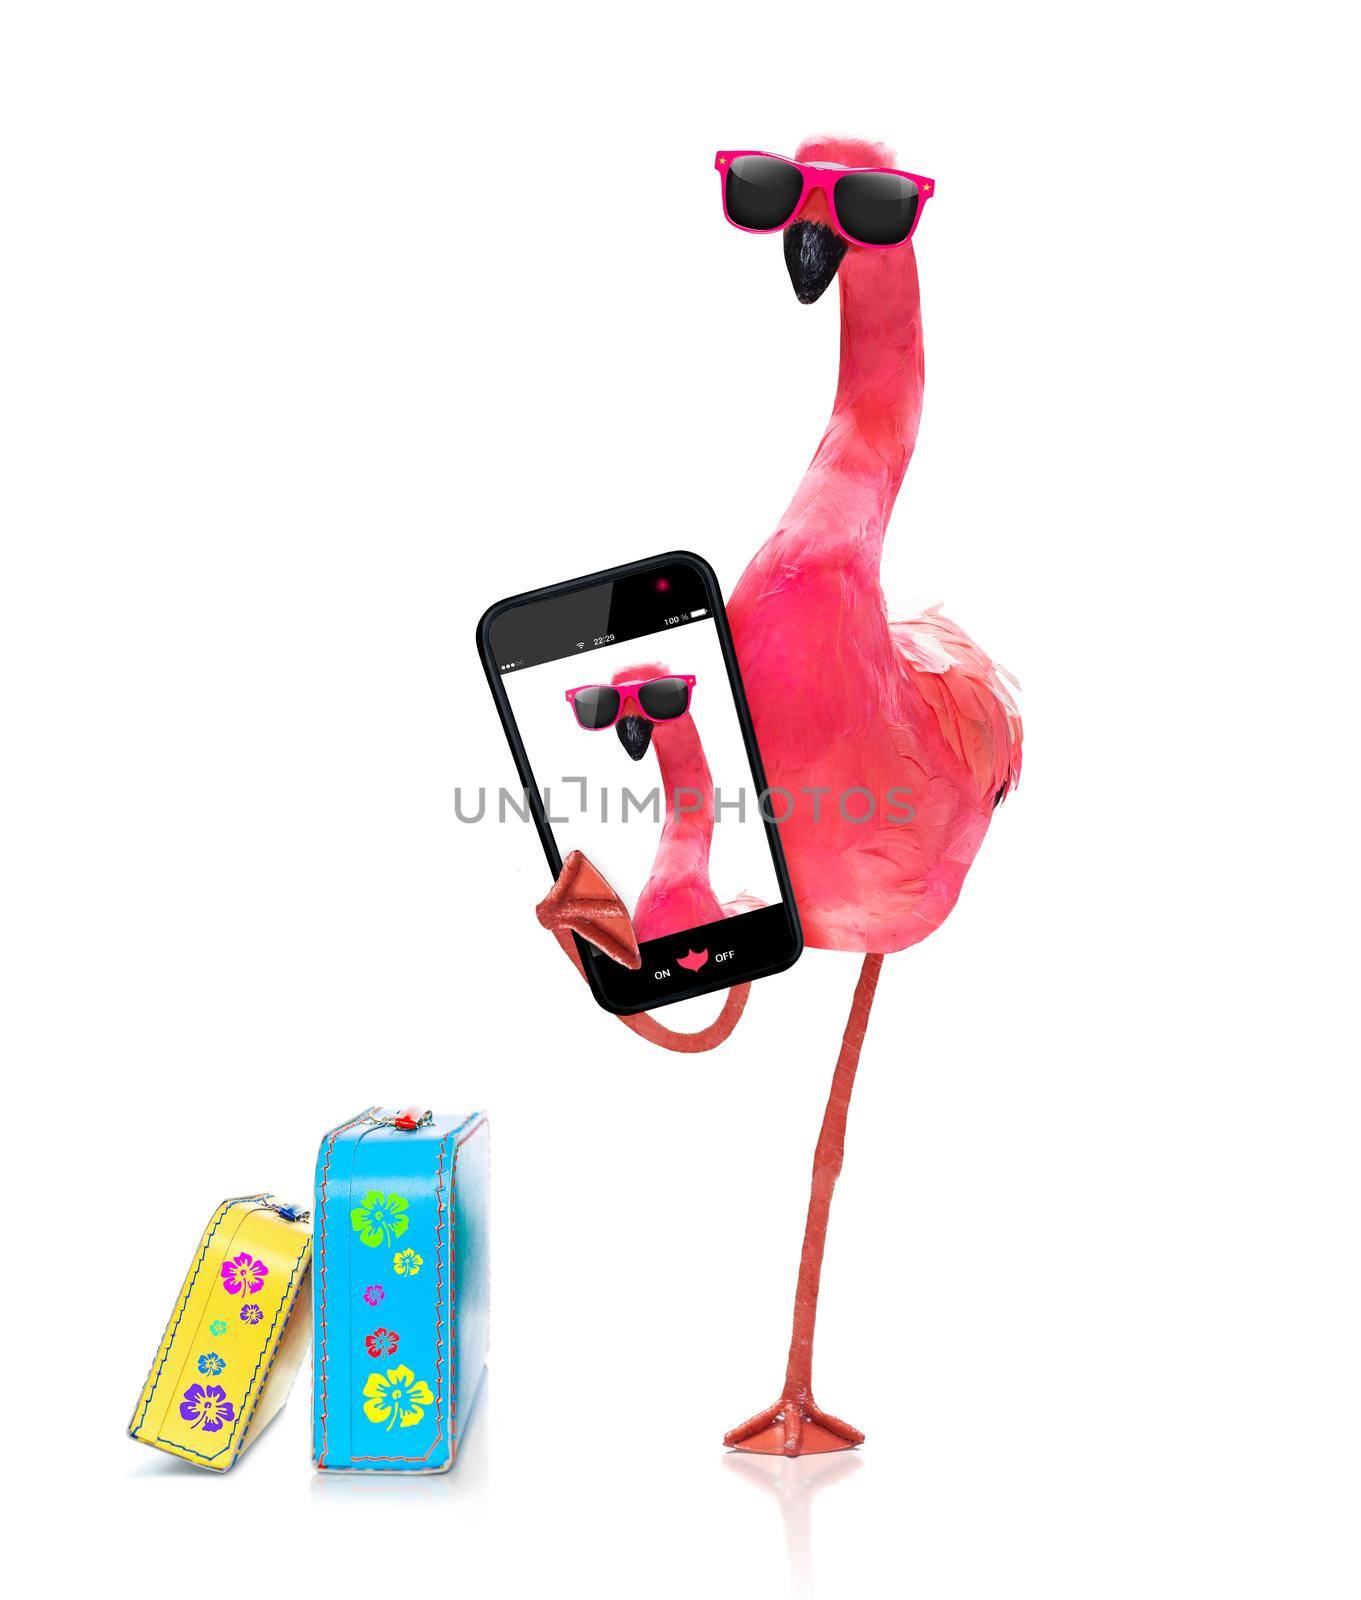 flamingo taking a selfie by Brosch